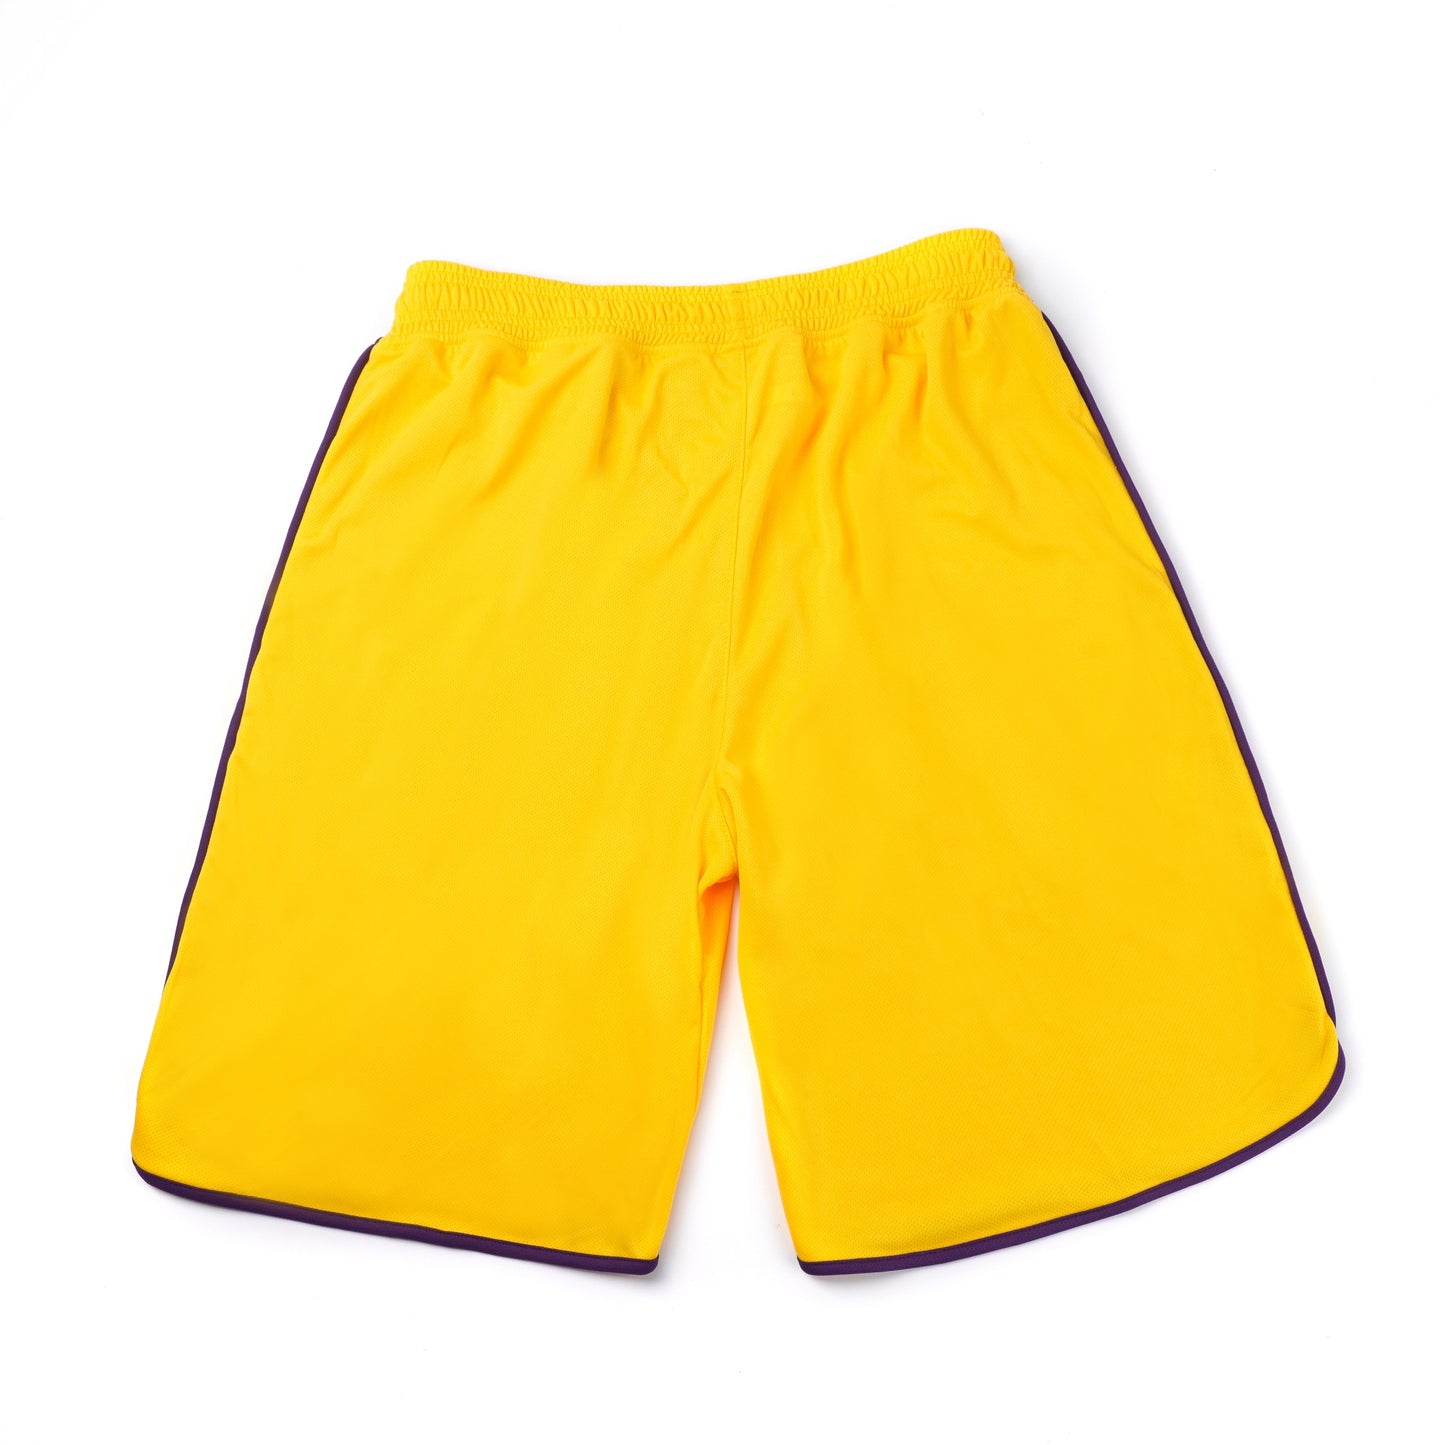 AZA Basketball Icon Shorts - Yellow/Purple